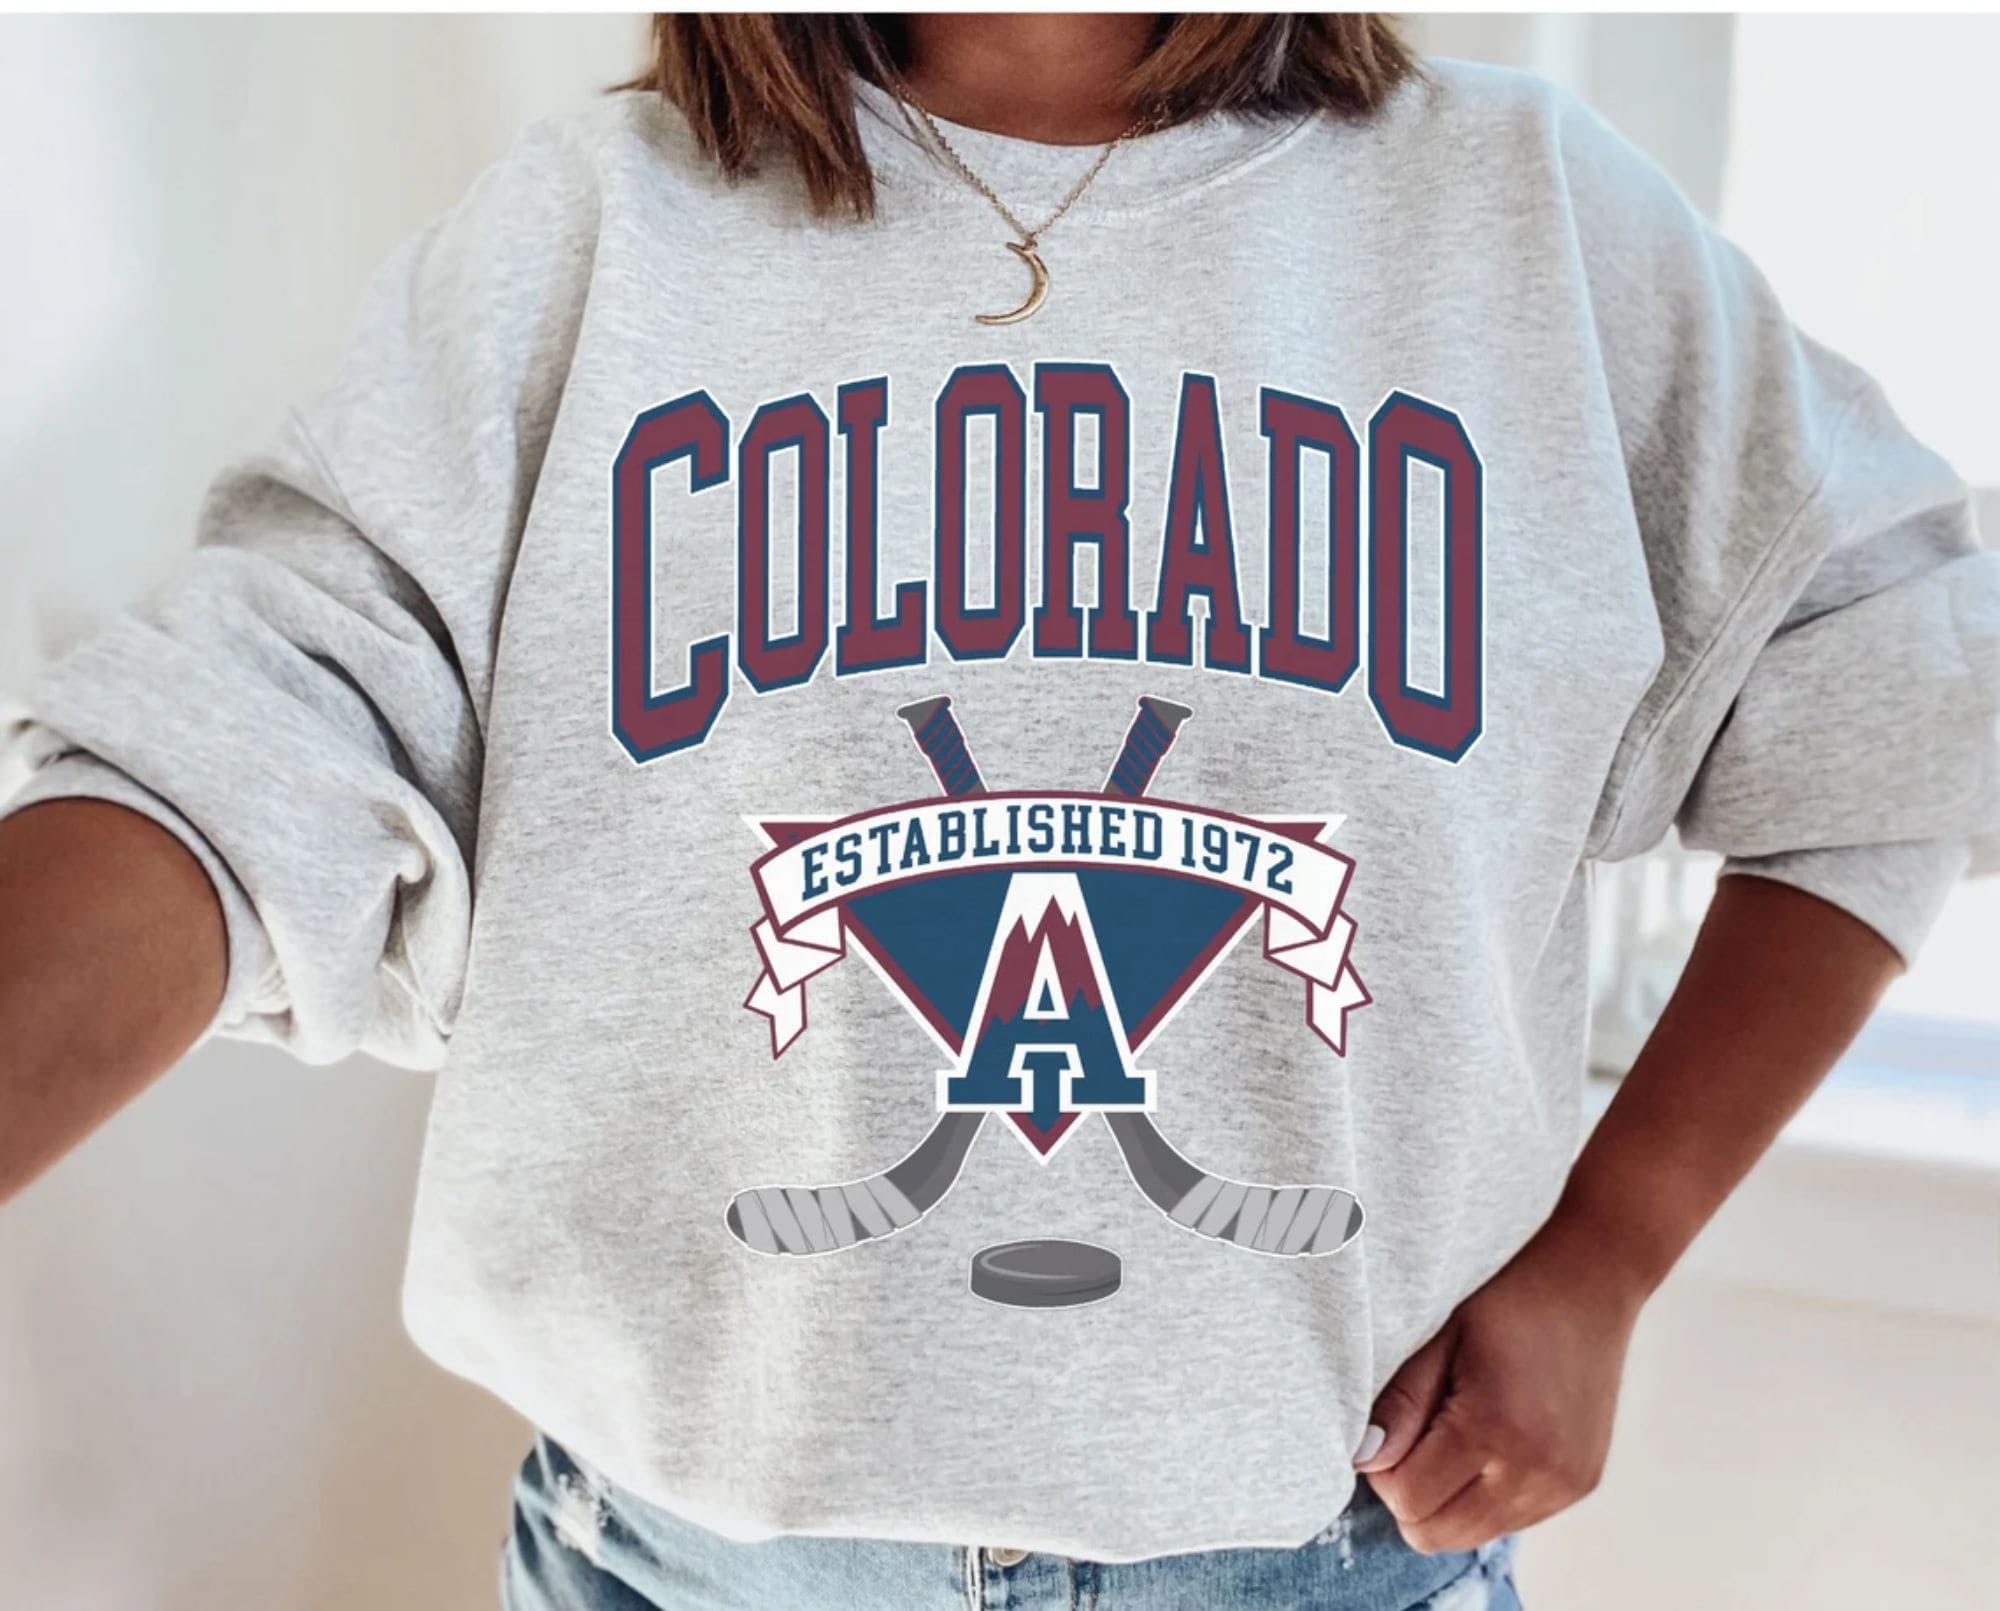 Colorado Rockies Hockey Sweatshirts & Hoodies for Sale